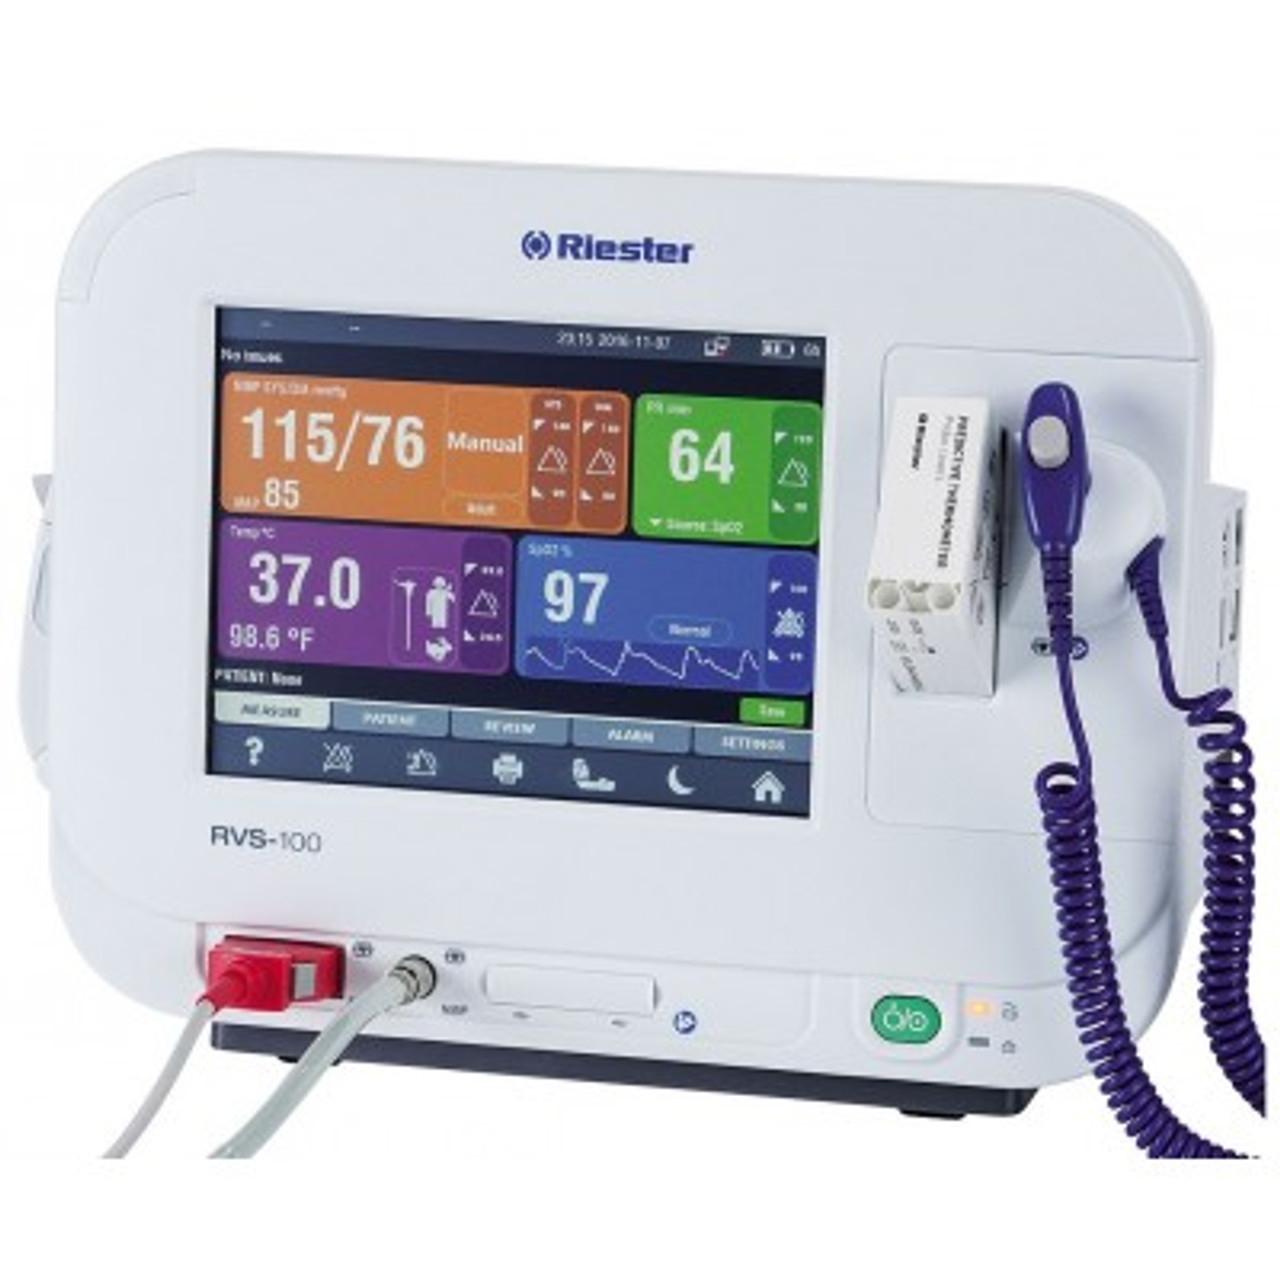 Edan Instruments Inc. NIBP Blood Pressure Cuff for Edan Monitors